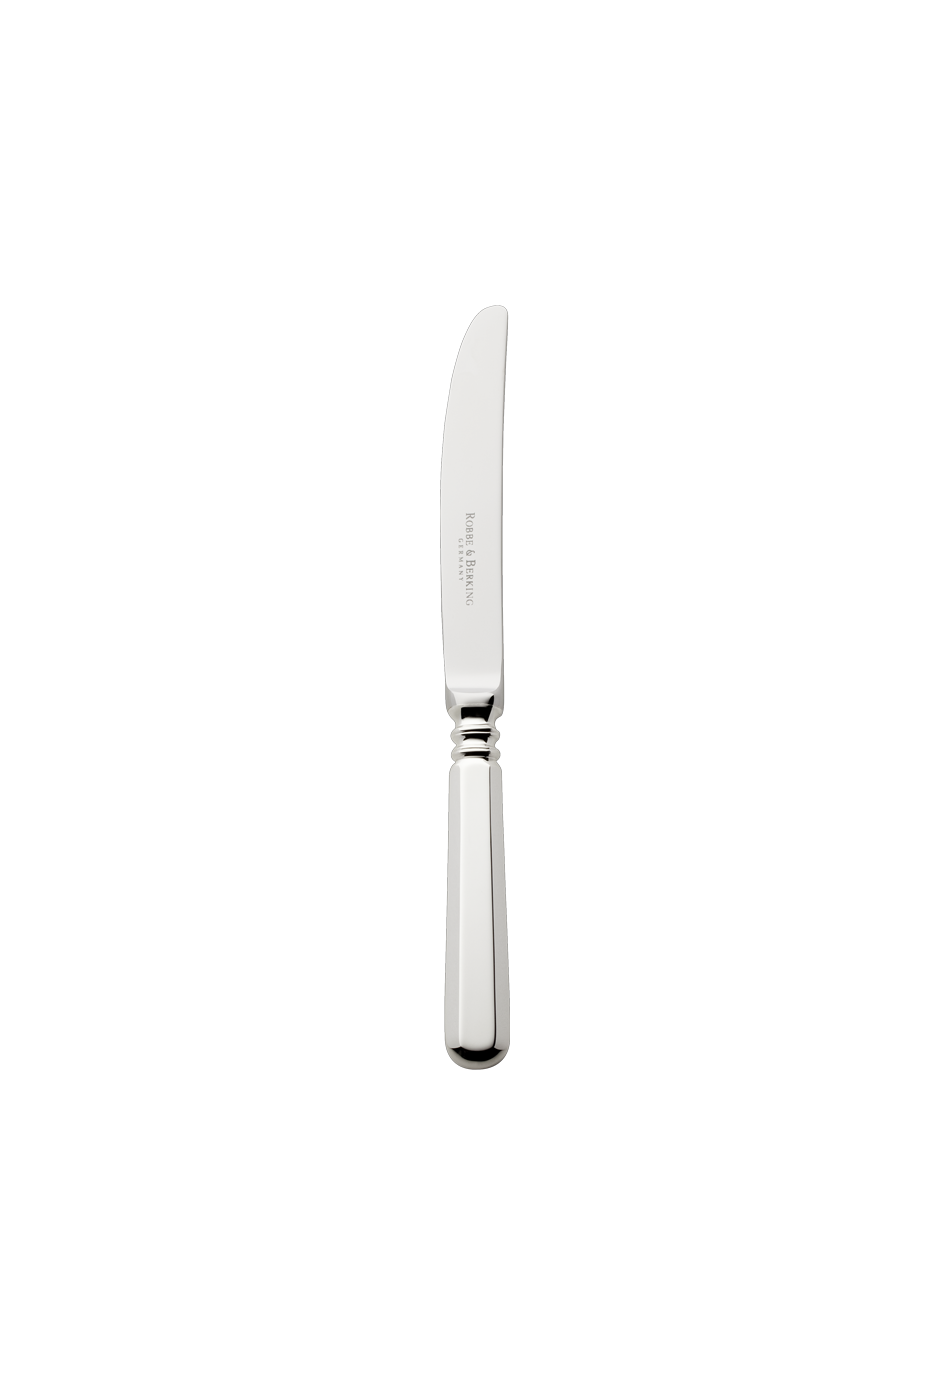 Alt-Spaten Children's Knife (150g massive silverplated)